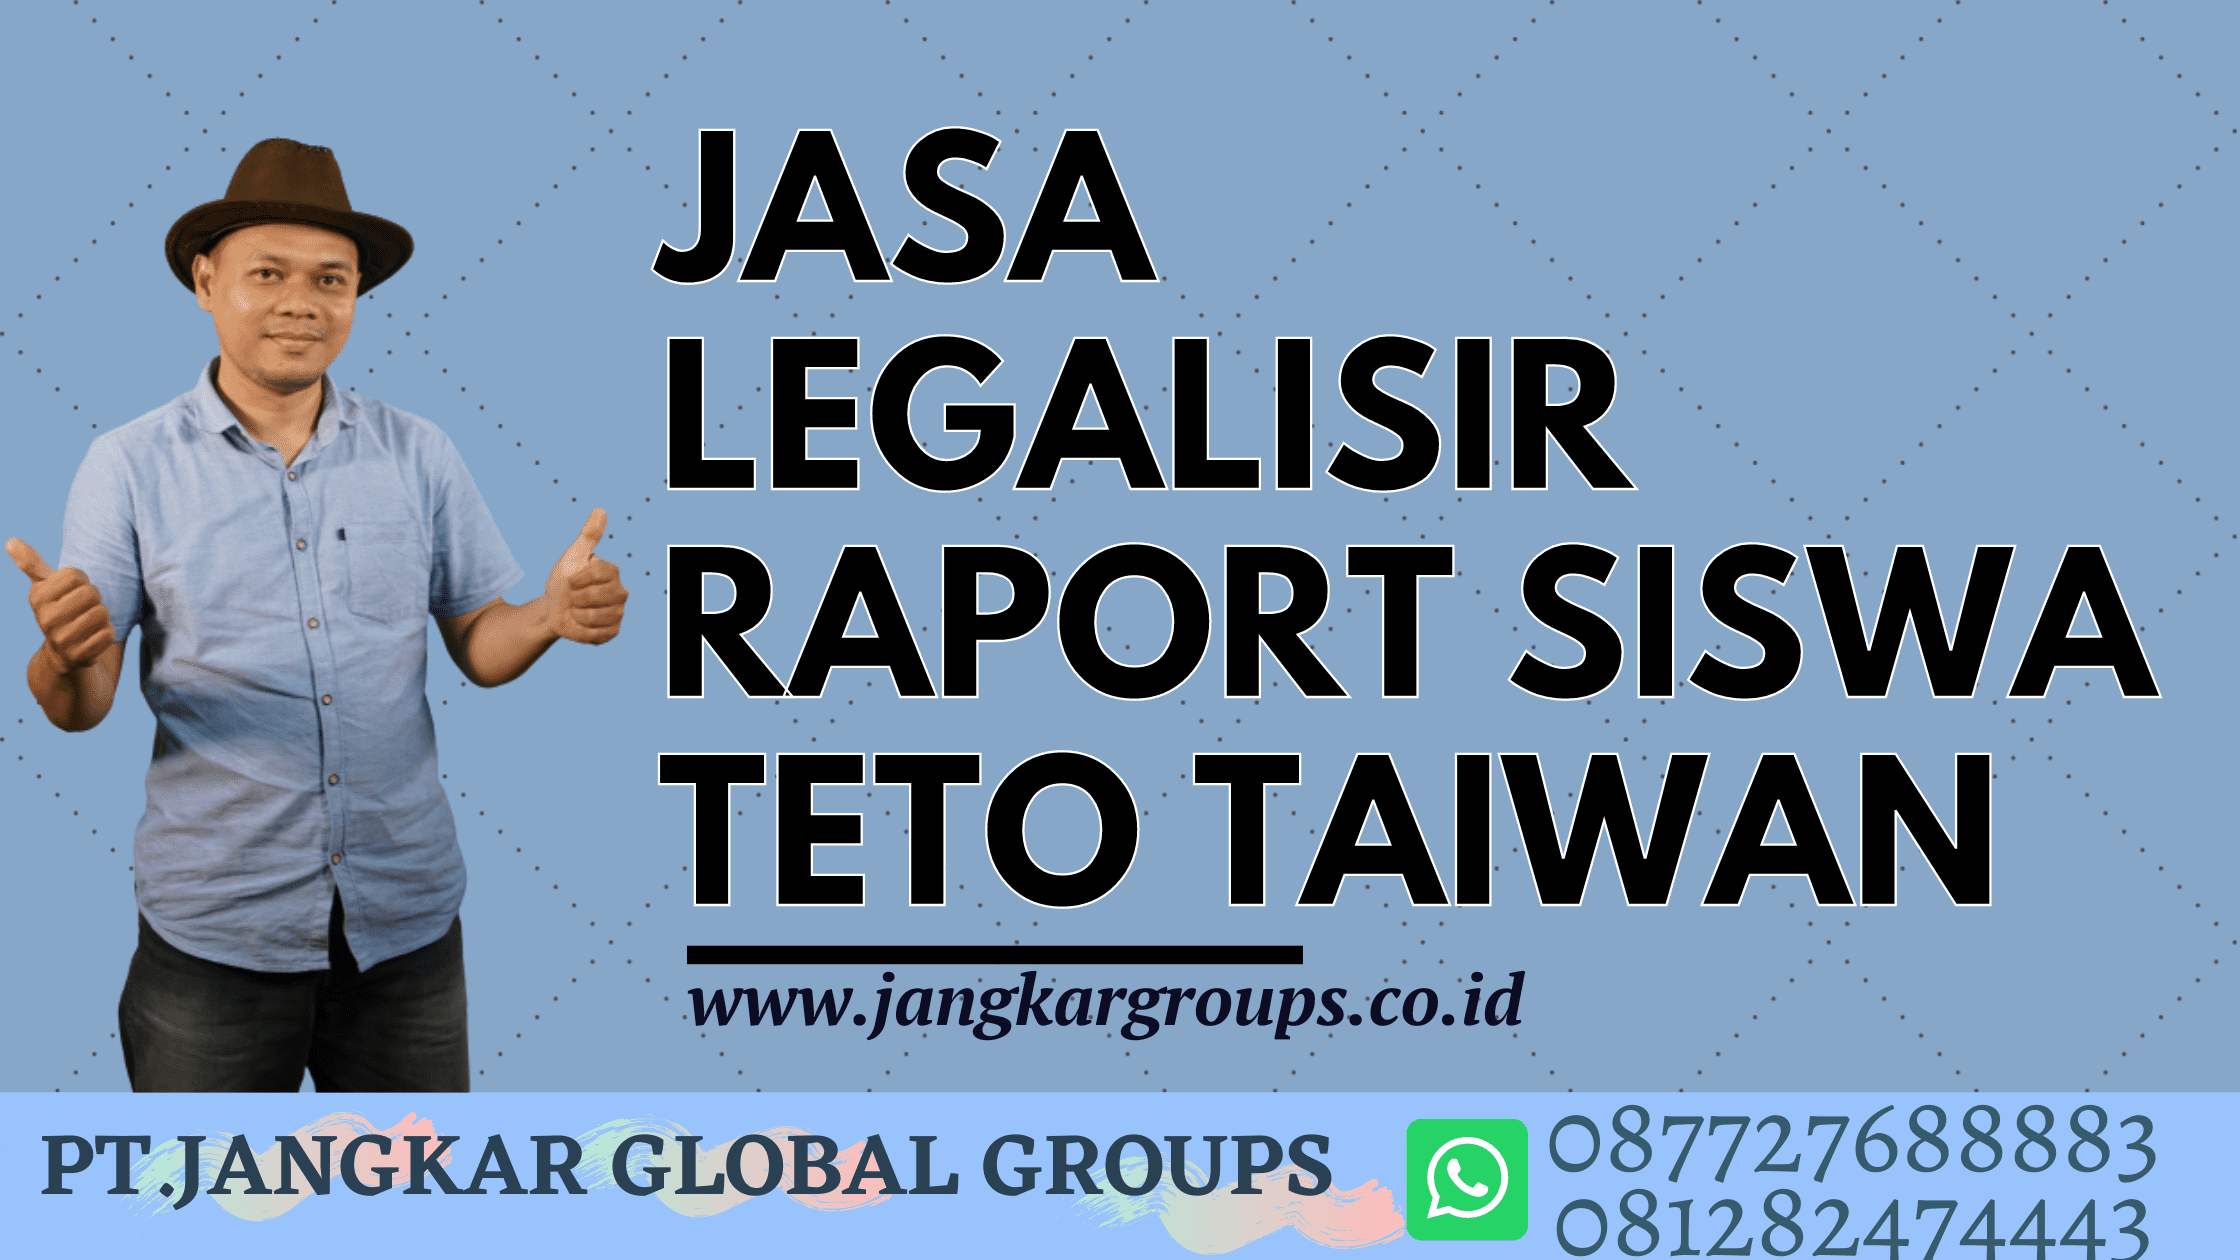 JASA LEGALISIR RAPORT SISWA TETO TAIWAN